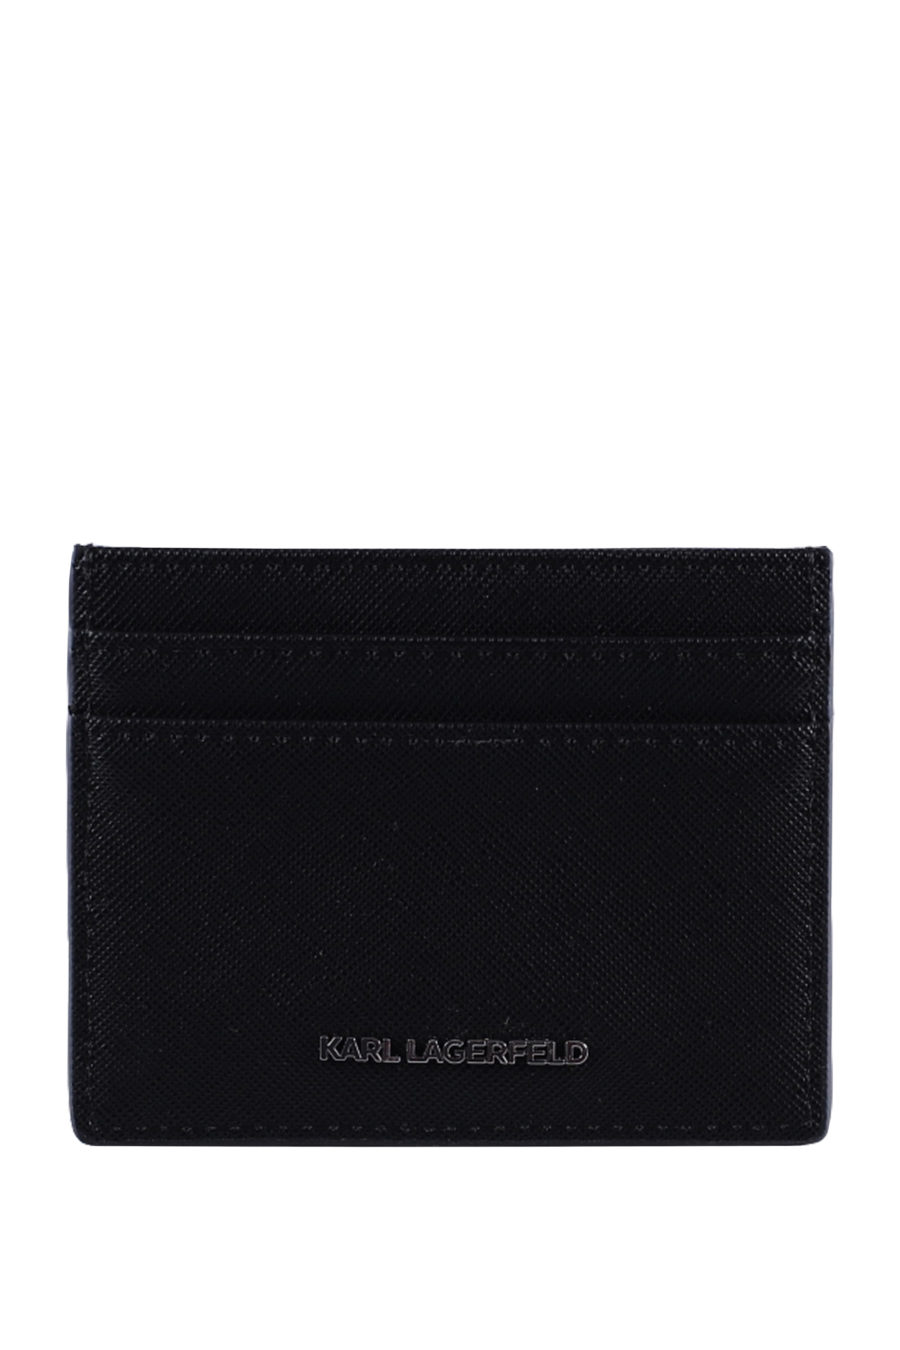 Black card holder with "Karl" logo - IMG 0023